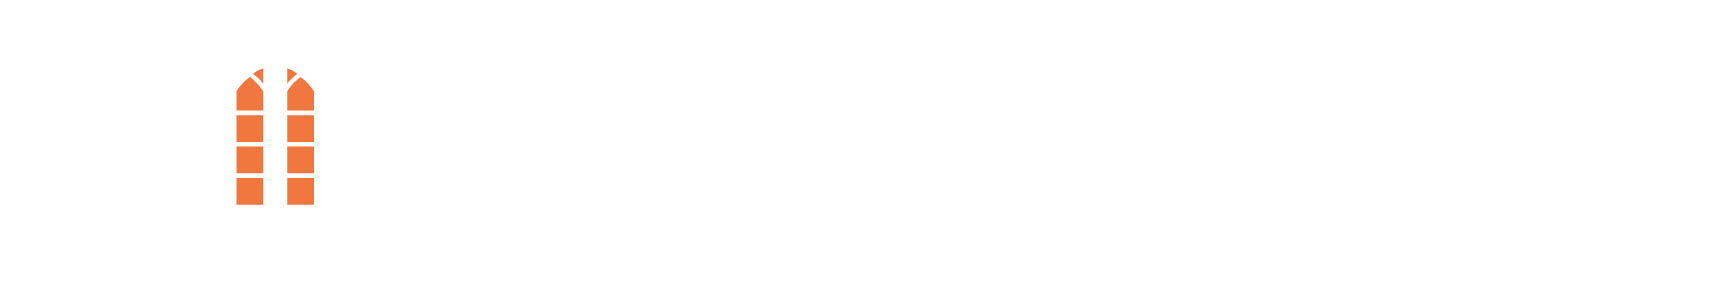 LibraryPress@UF